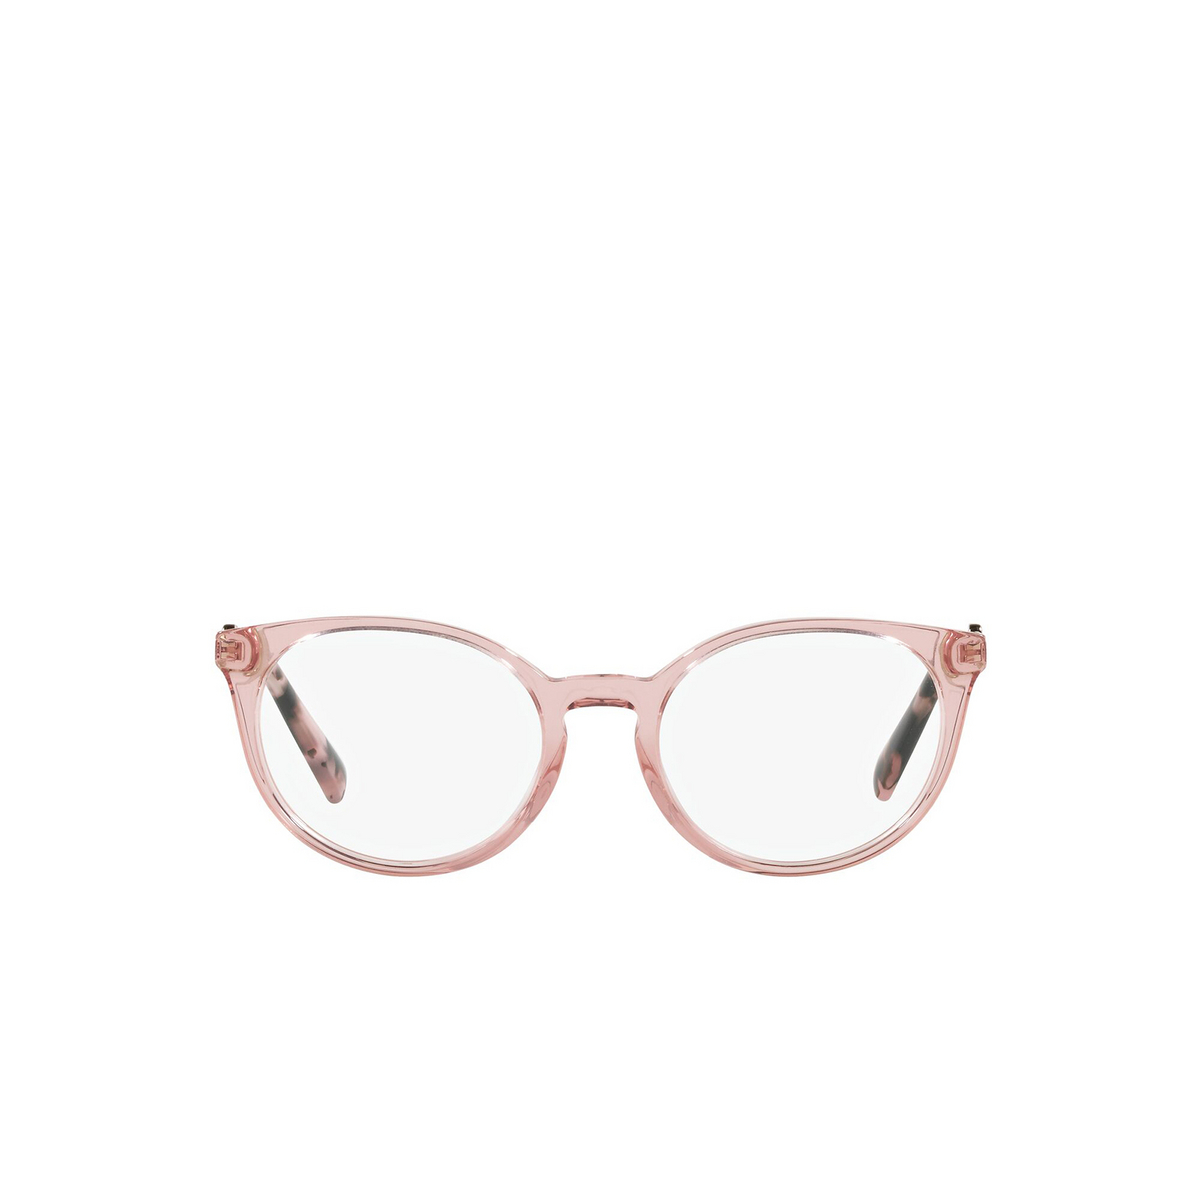 Valentino® Round Eyeglasses: VA3068 color Pink Transparent 5155 - front view.